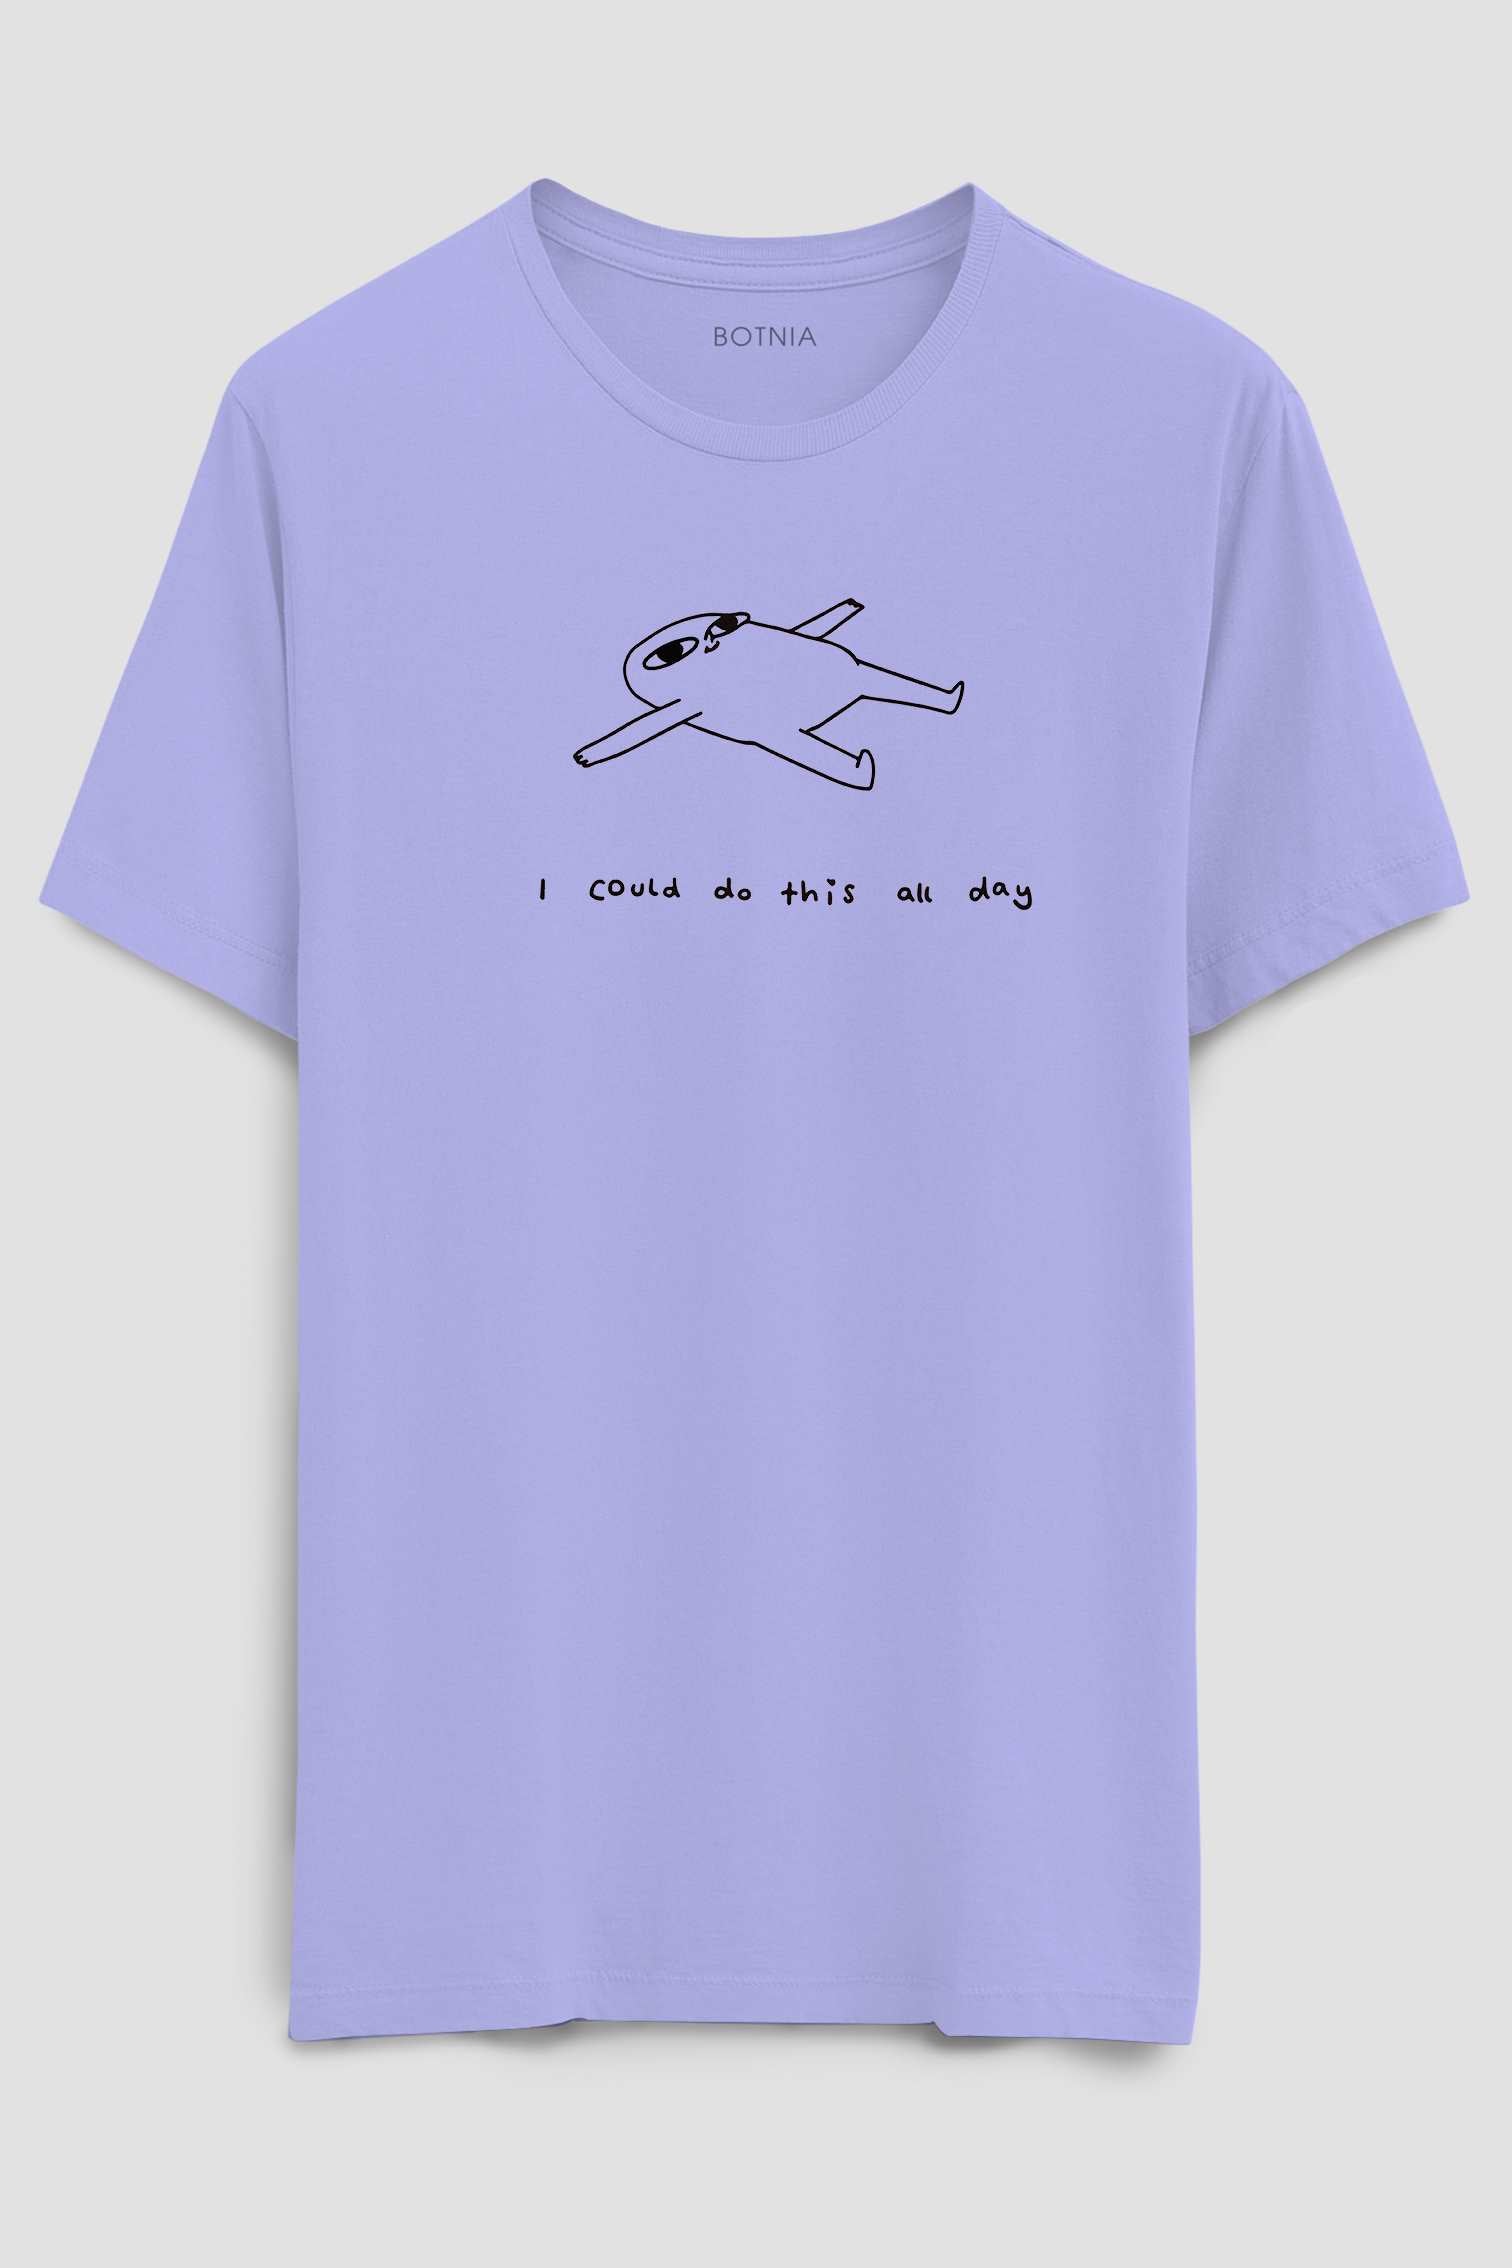 All Day- Half sleeve t-shirt